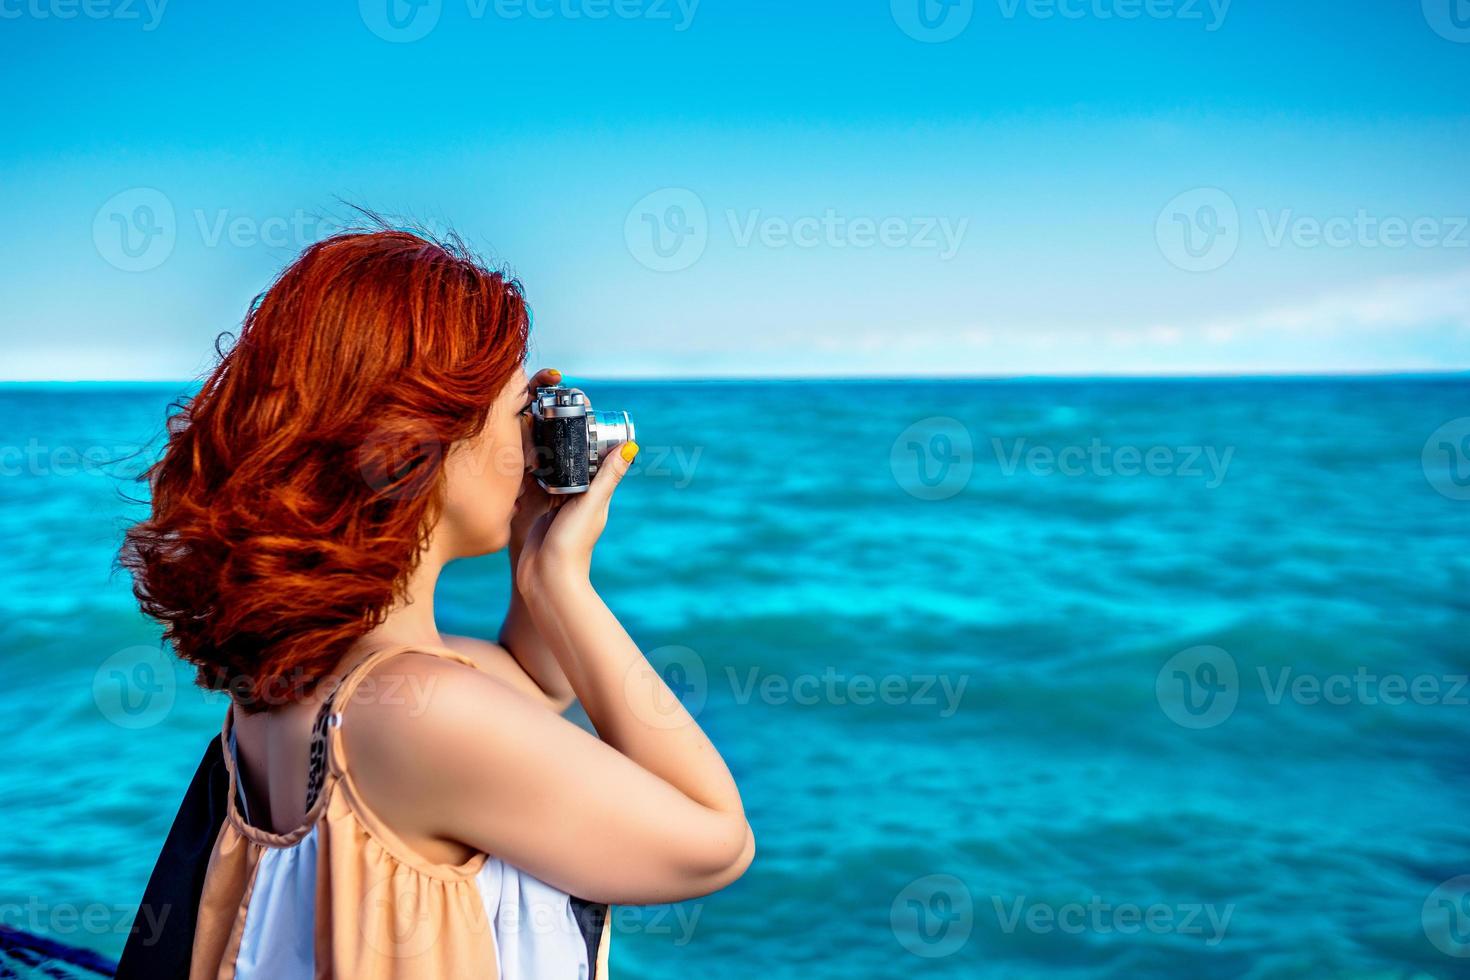 persoon op oceaan met camera. foto